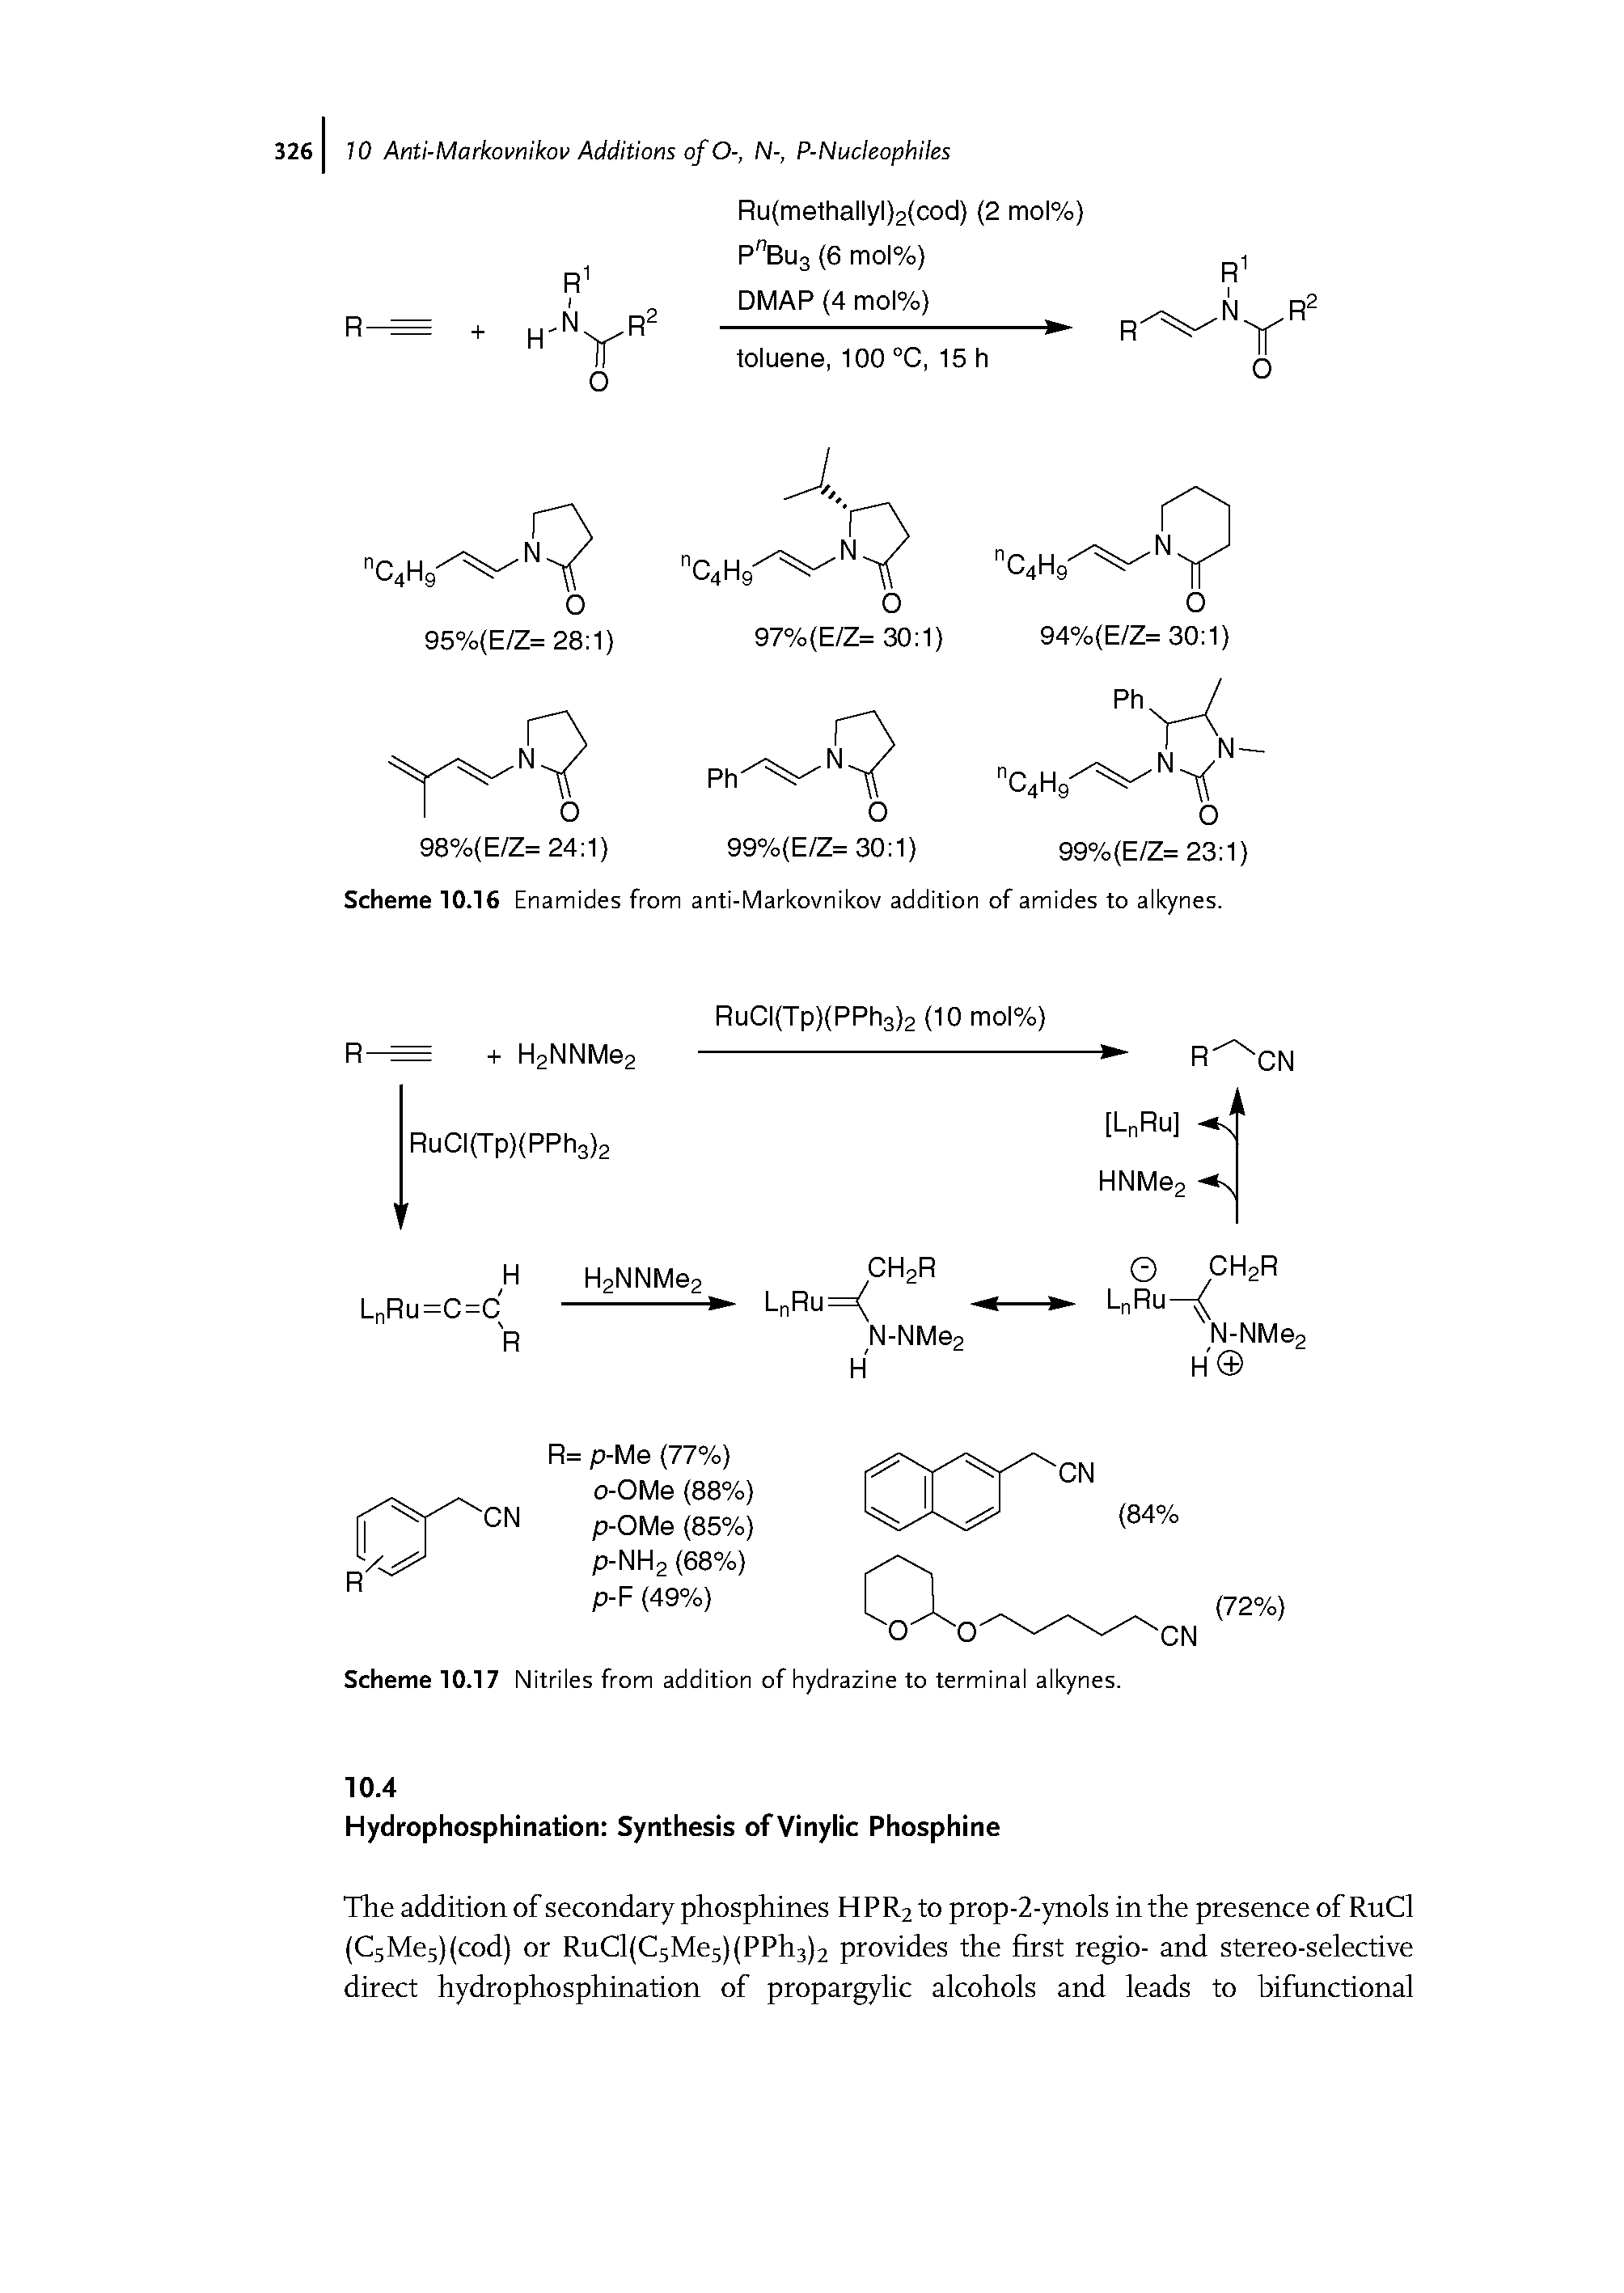 Scheme 10.17 Nitriles from addition of hydrazine to terminal alkynes.